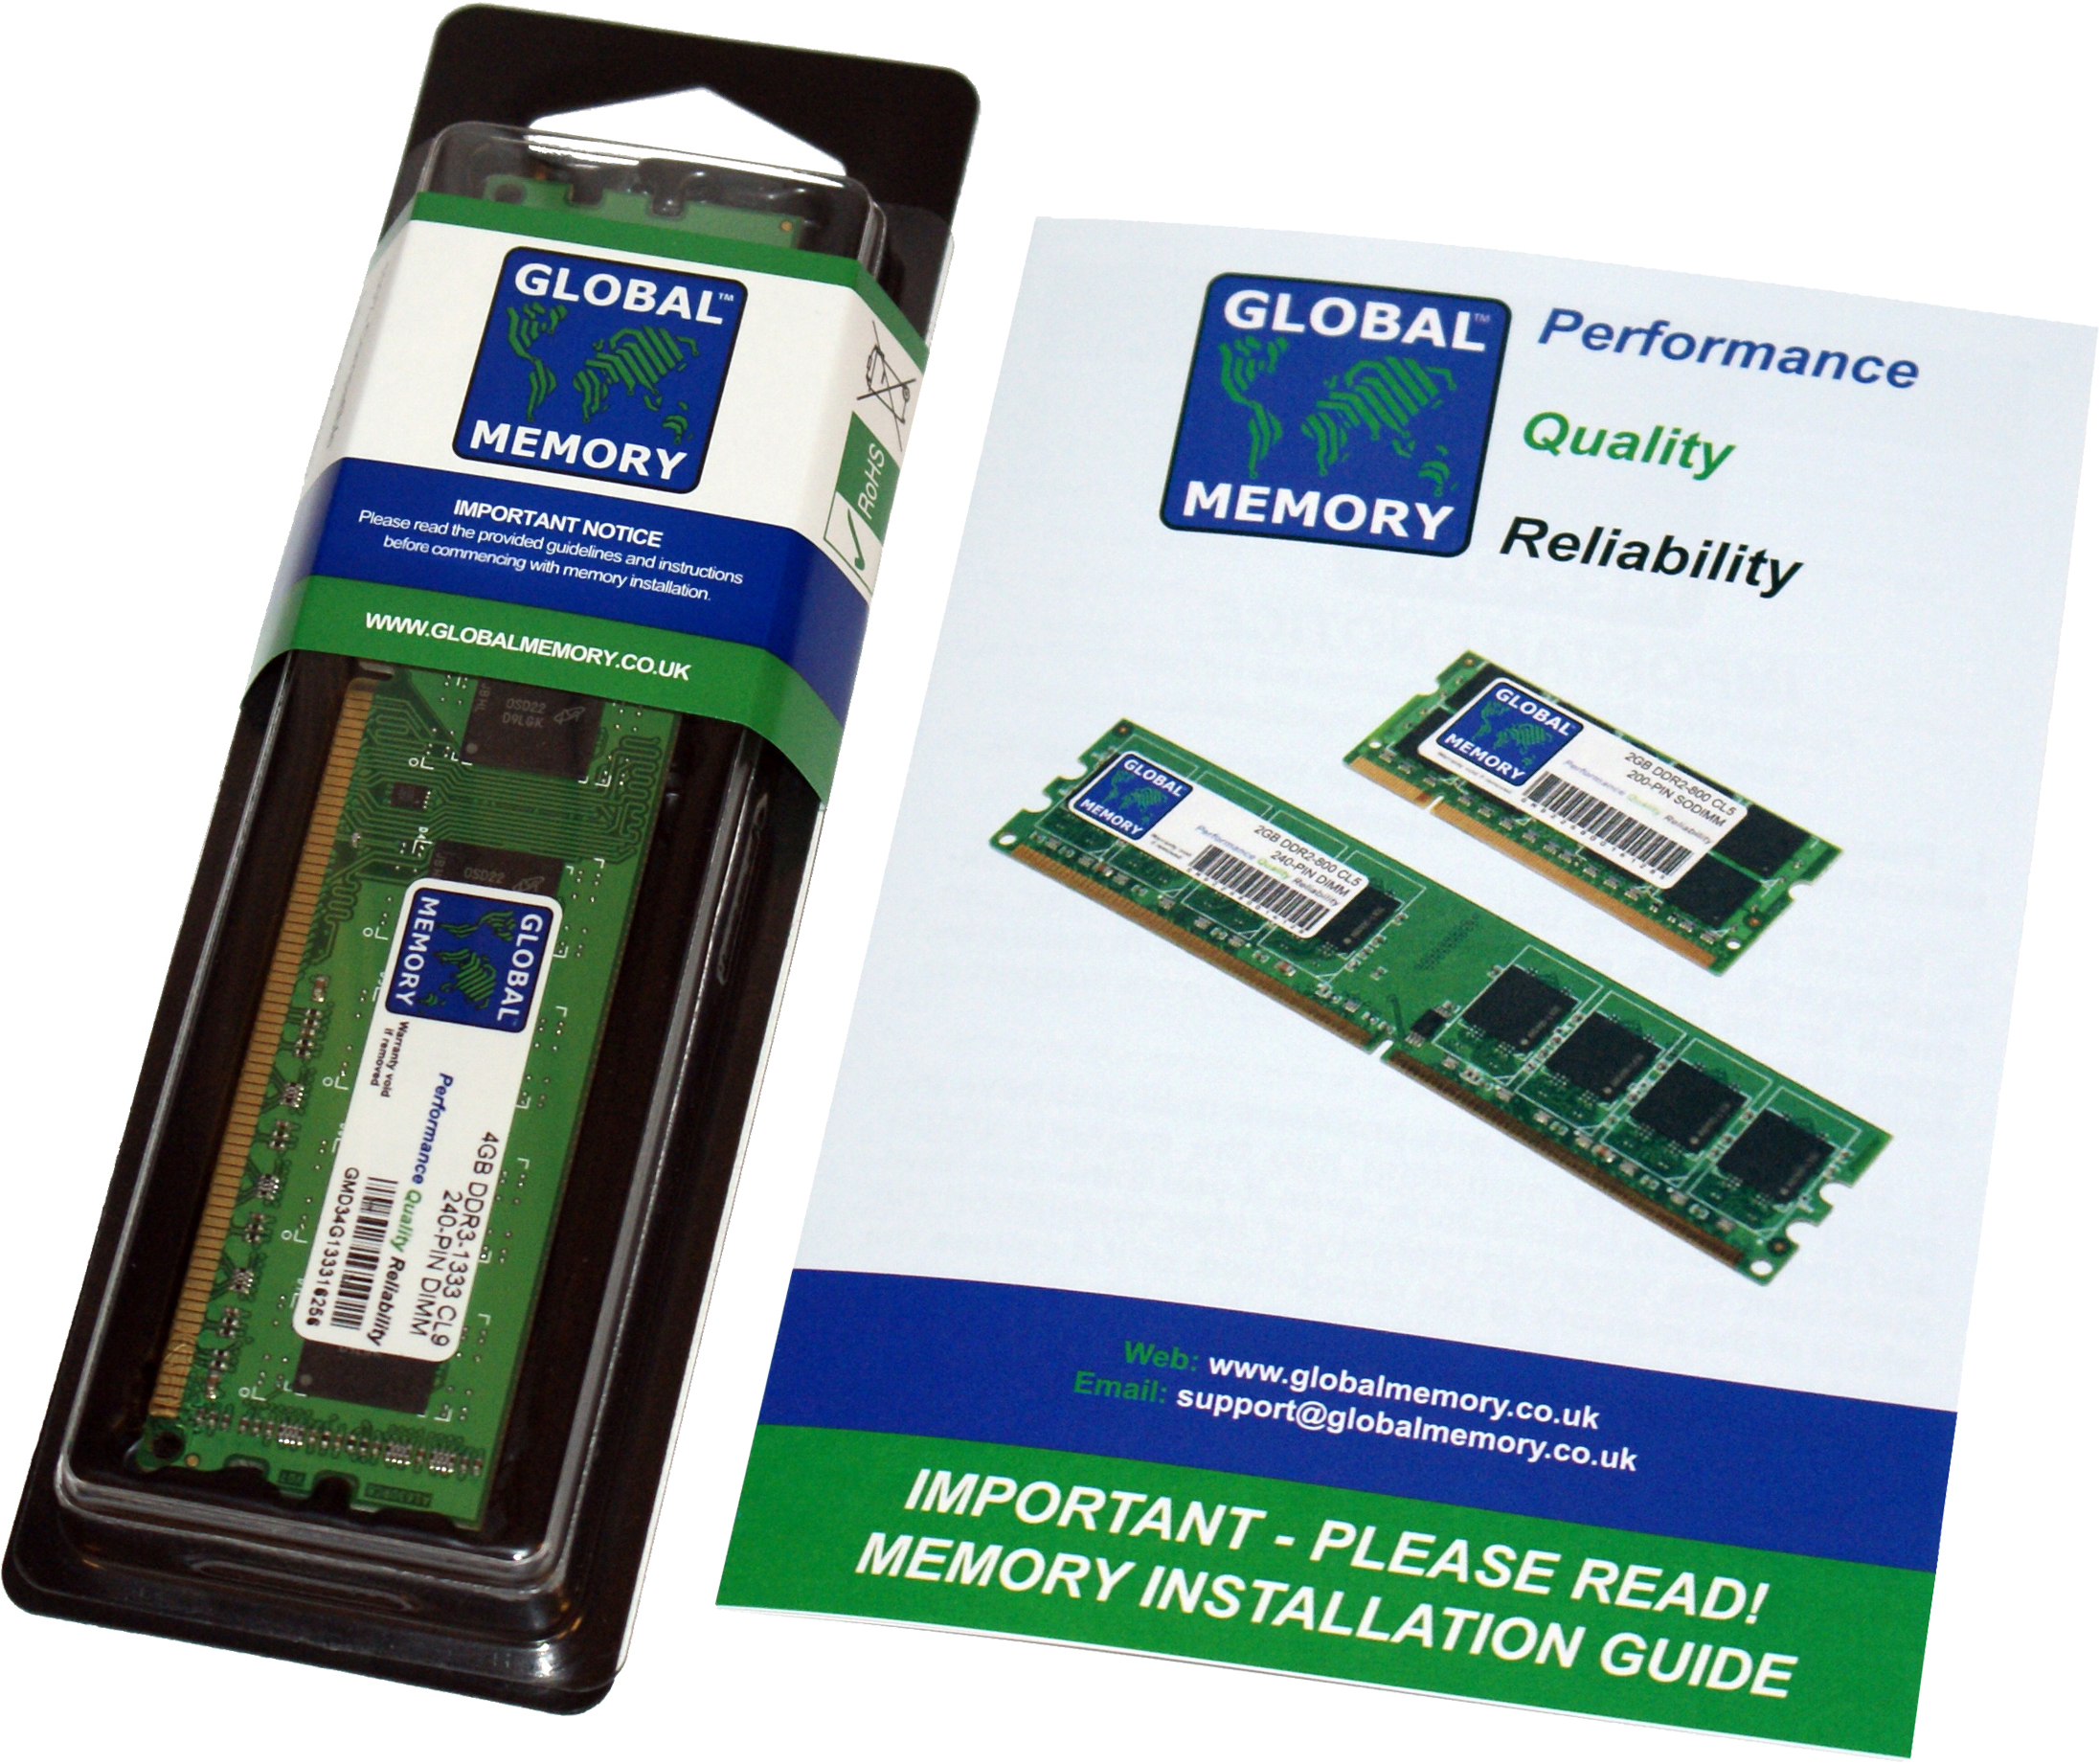 8GB DDR3 1866MHz PC3-14900 240-PIN DIMM MEMORY RAM FOR PACKARD BELL DESKTOPS